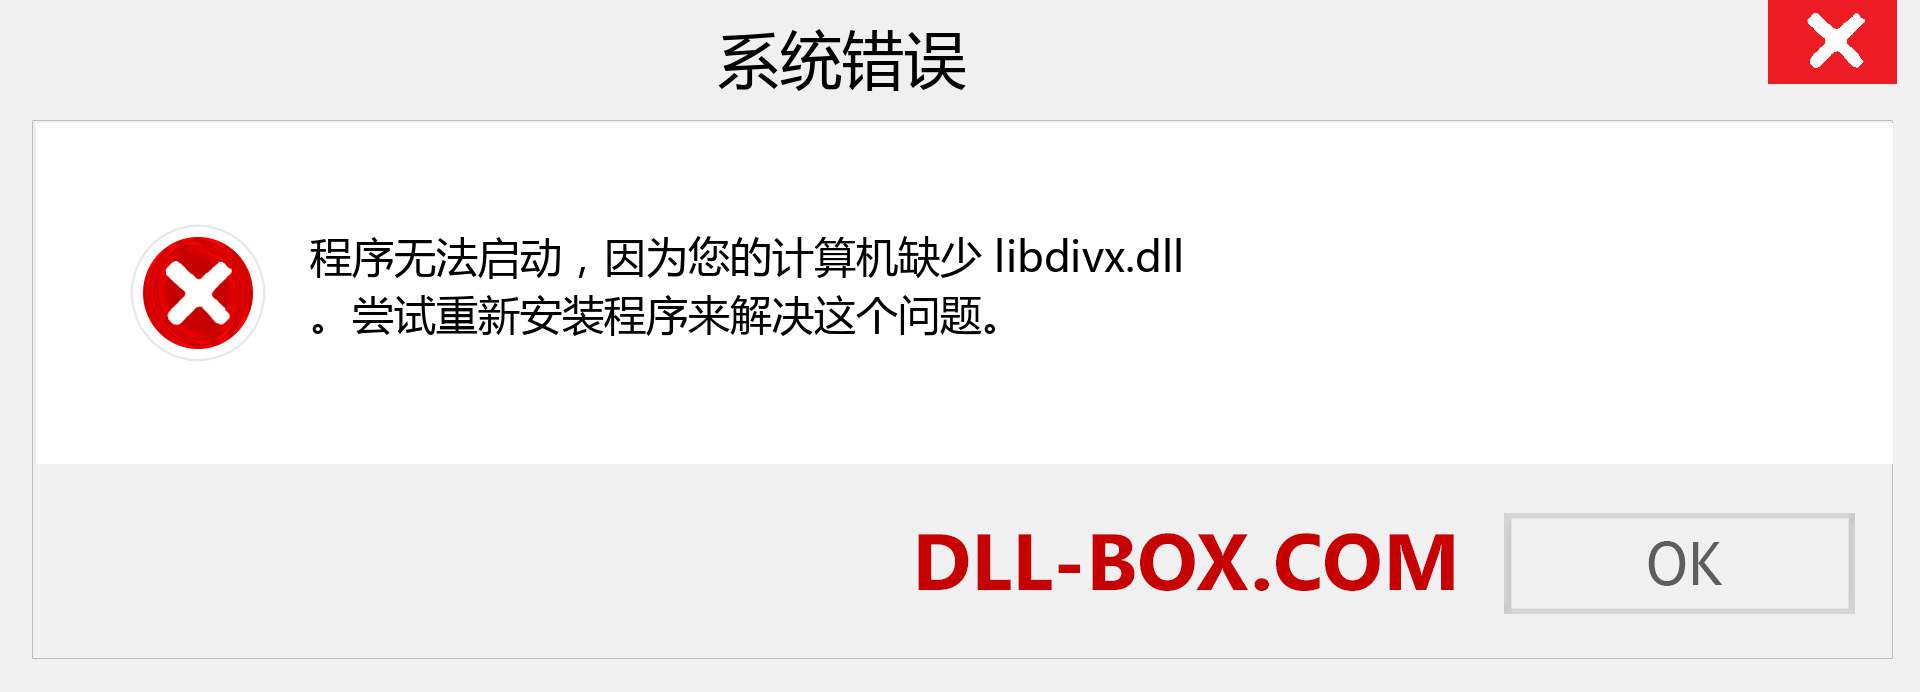 libdivx.dll 文件丢失？。 适用于 Windows 7、8、10 的下载 - 修复 Windows、照片、图像上的 libdivx dll 丢失错误